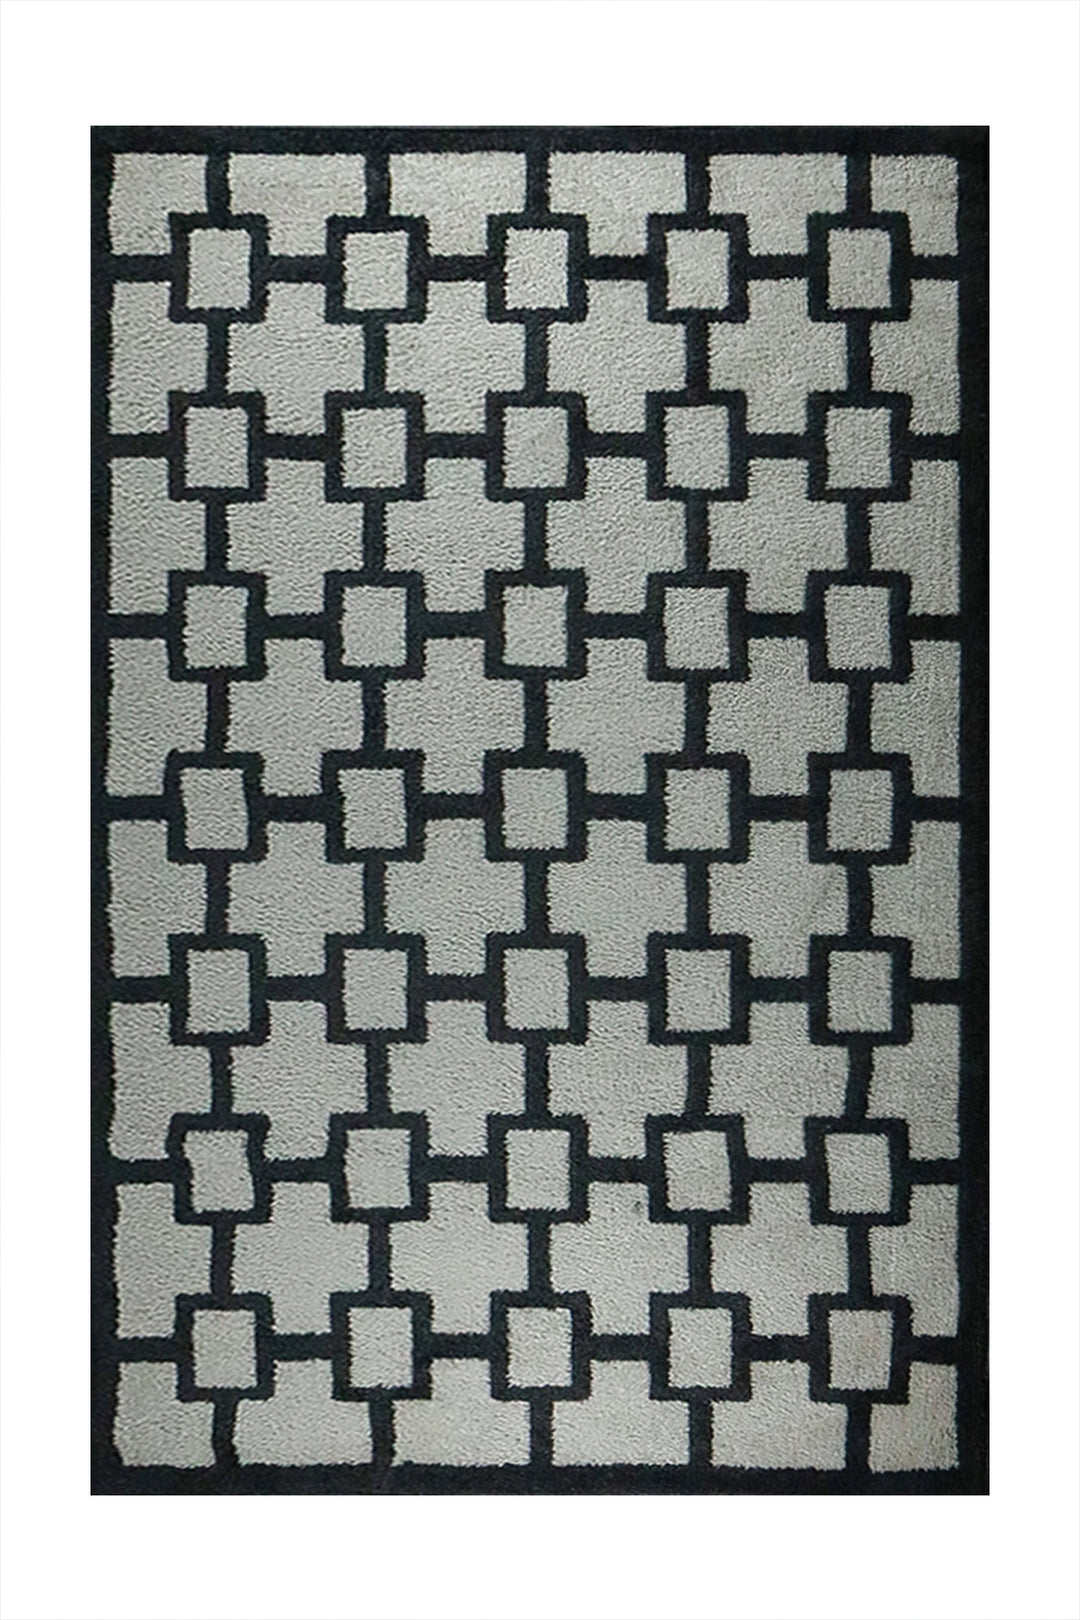 Turkish Plush and Soft Festival WD Shaggy Rug -5.3 x 7.5 FT - Gray and Black - Fluffy Furry Floor Decor Shaggy Rug